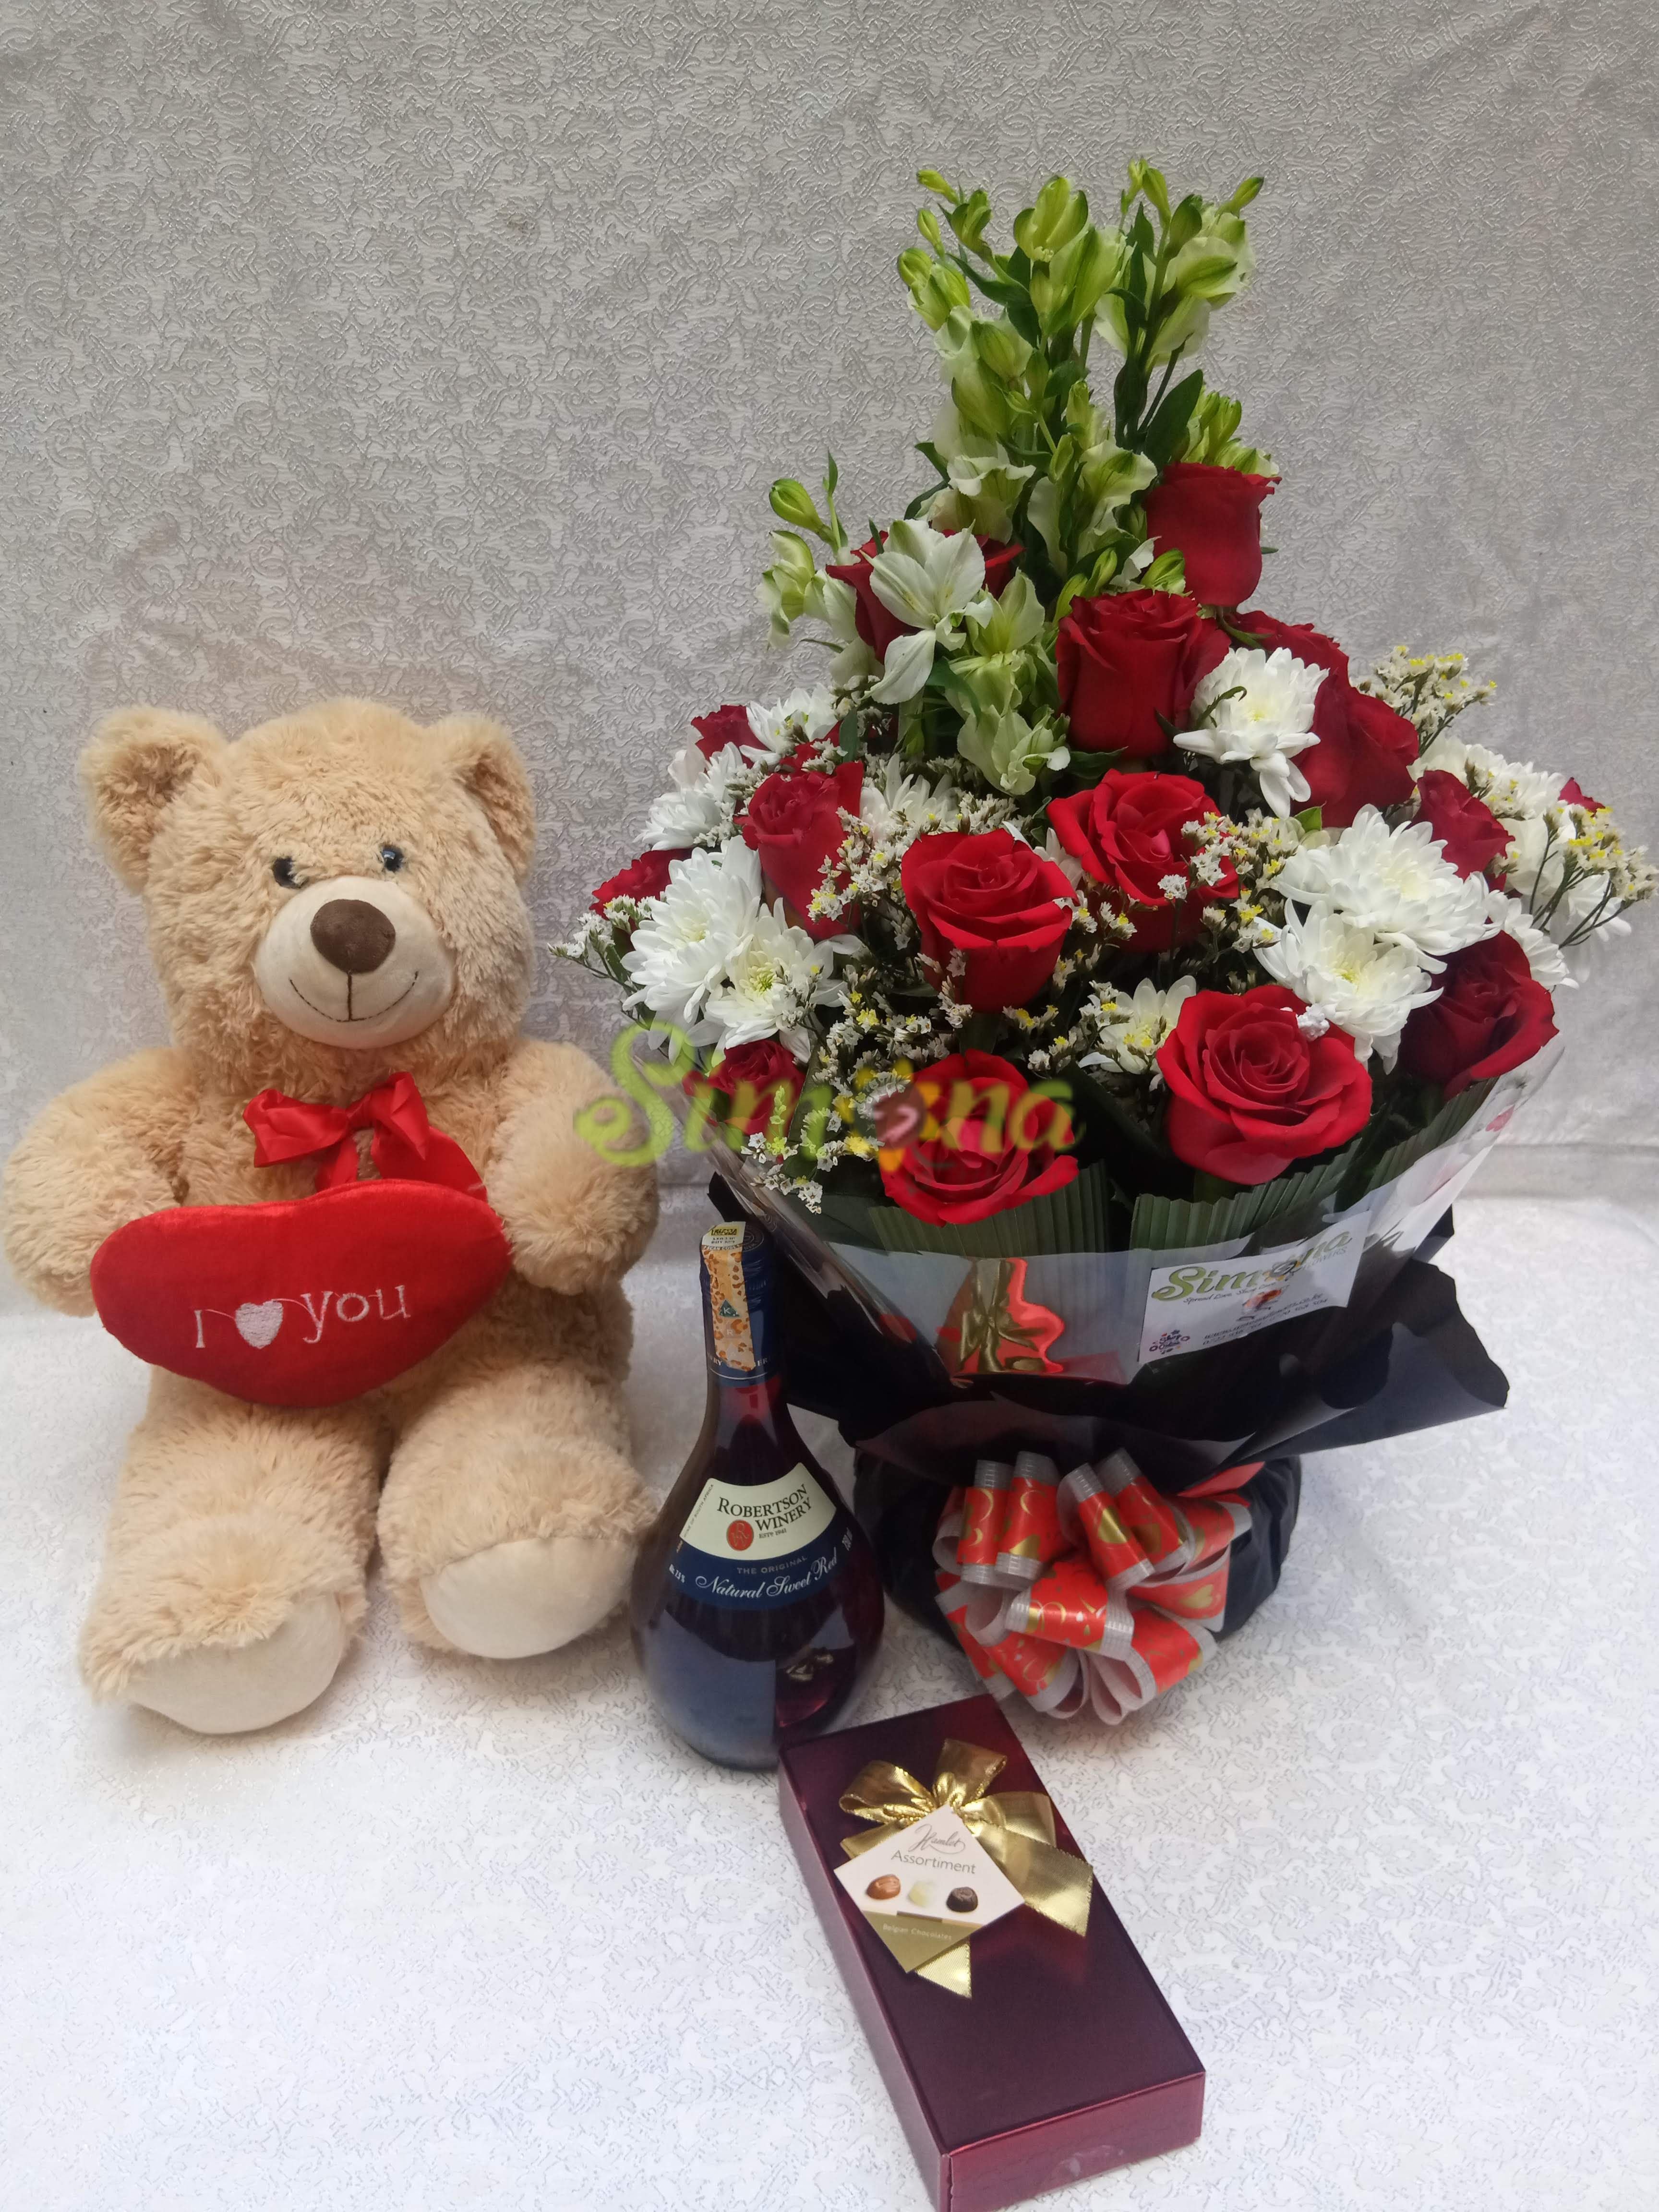 Diamond bouquet with red wine , Guylian chocolate and teddy bear